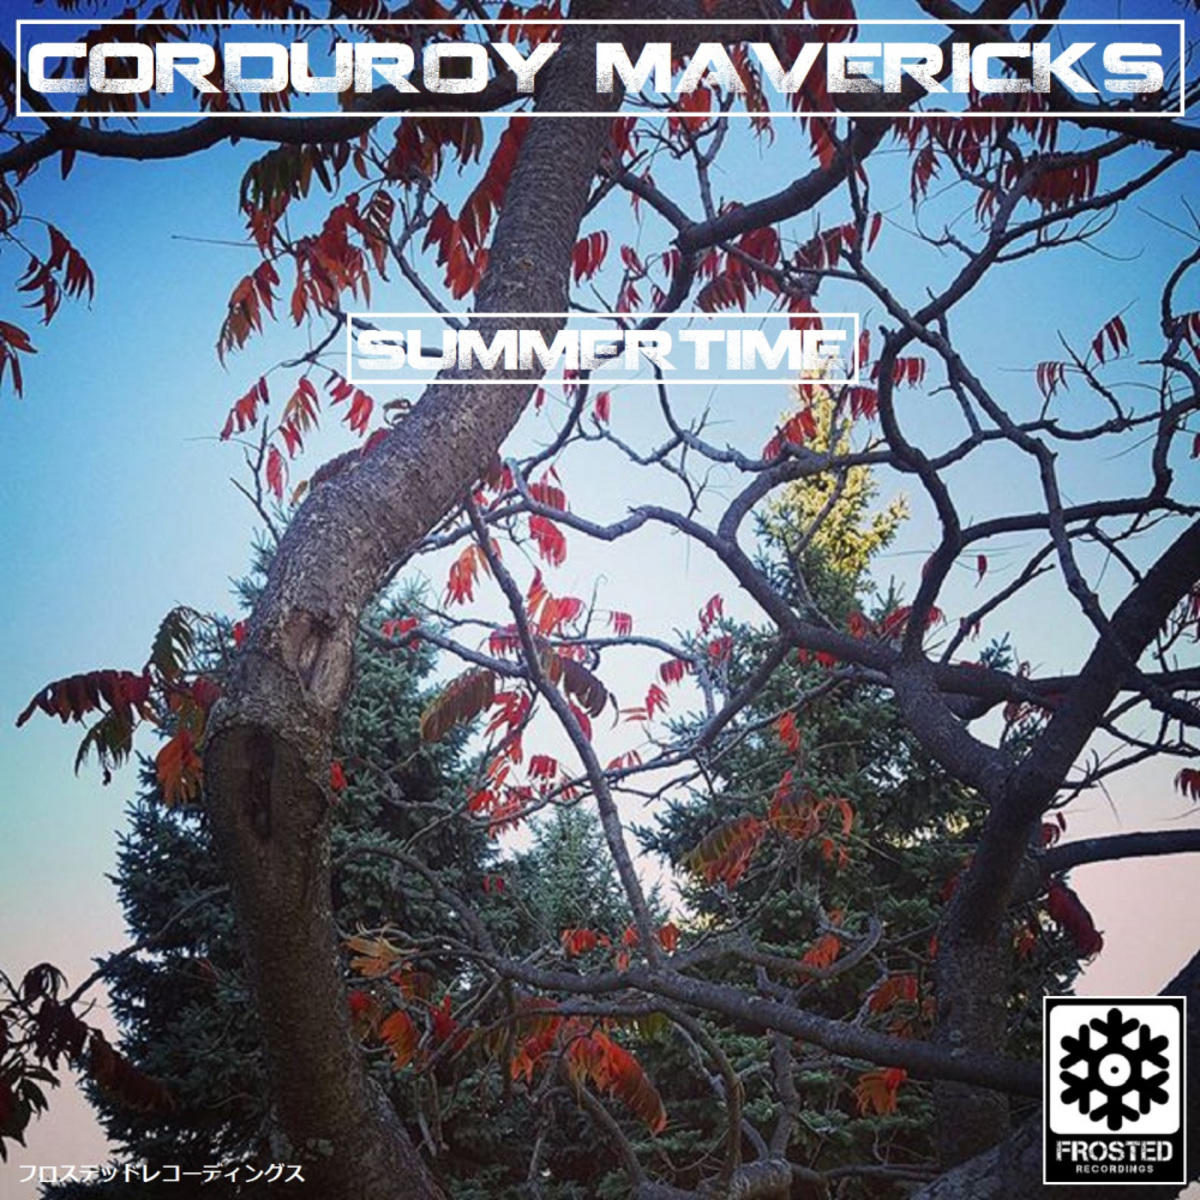 Corduroy Mavericks - Summertime / Frosted Recordings